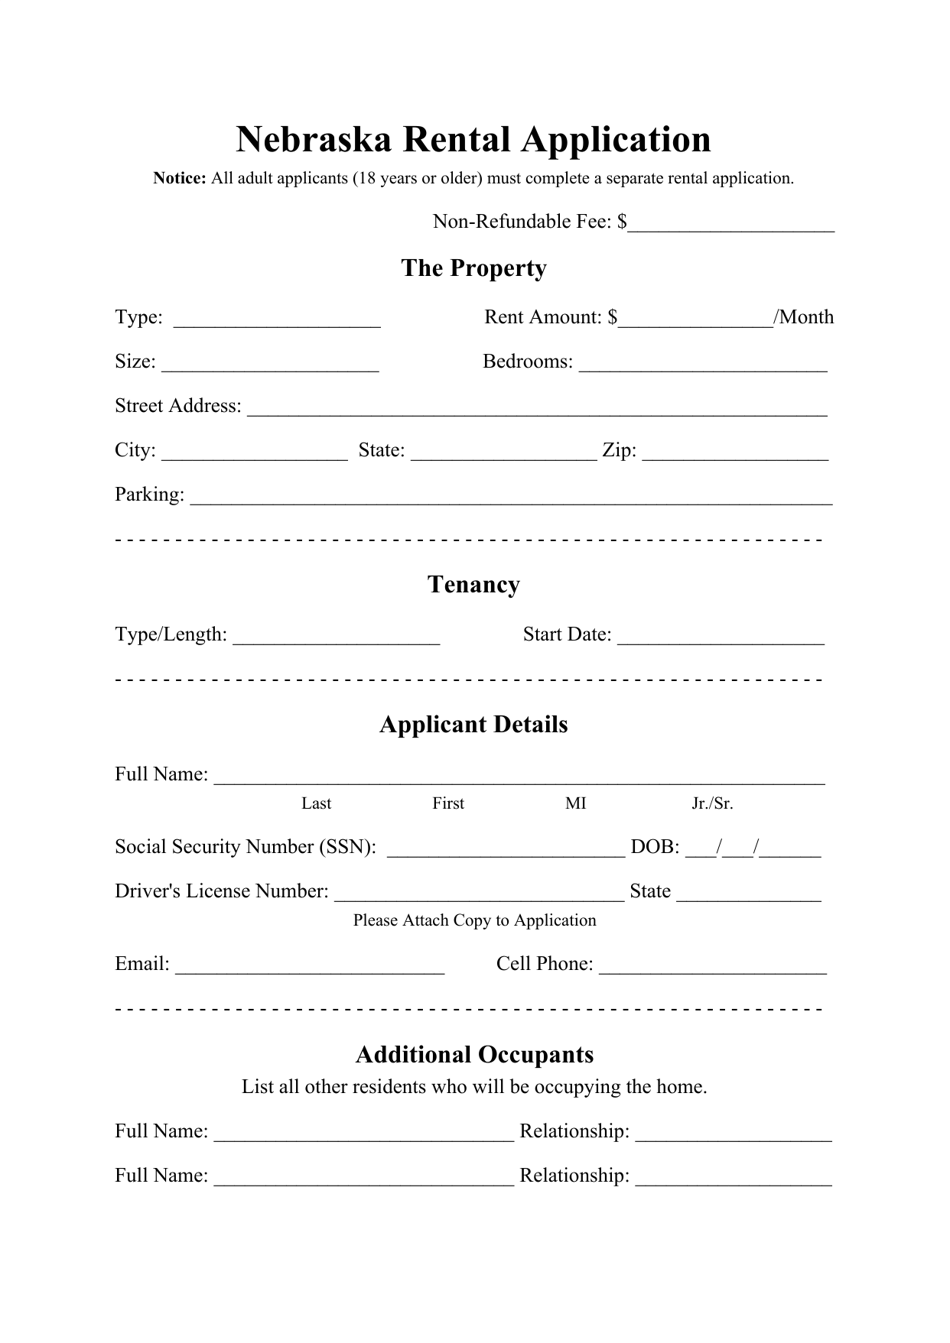 Nebraska Rental Application Form Fill Out, Sign Online and Download